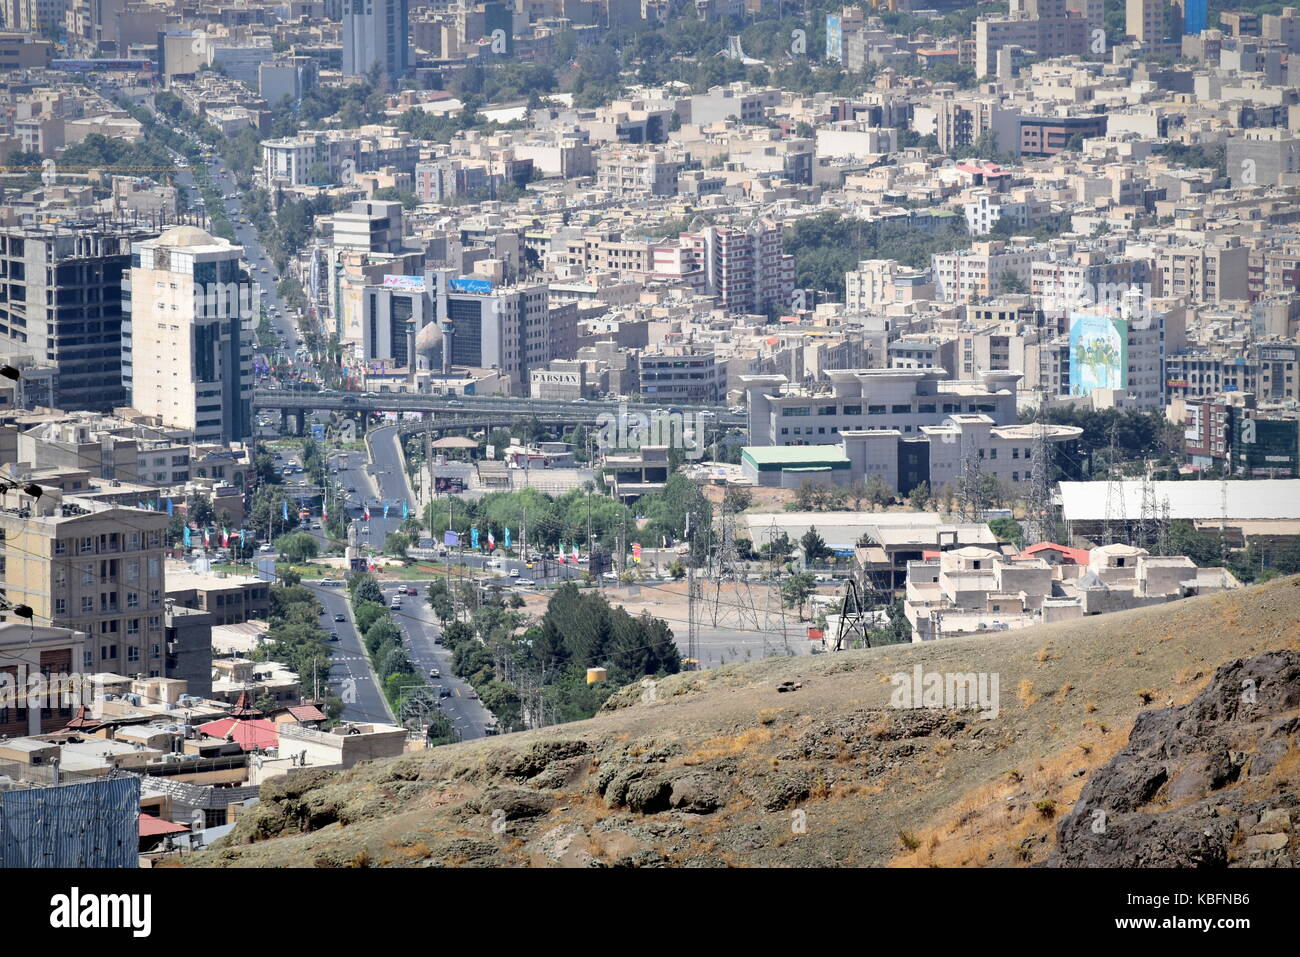 Iran city skyline from the mountains - Urban growth and development in Karaj near Tehran Stock Photo